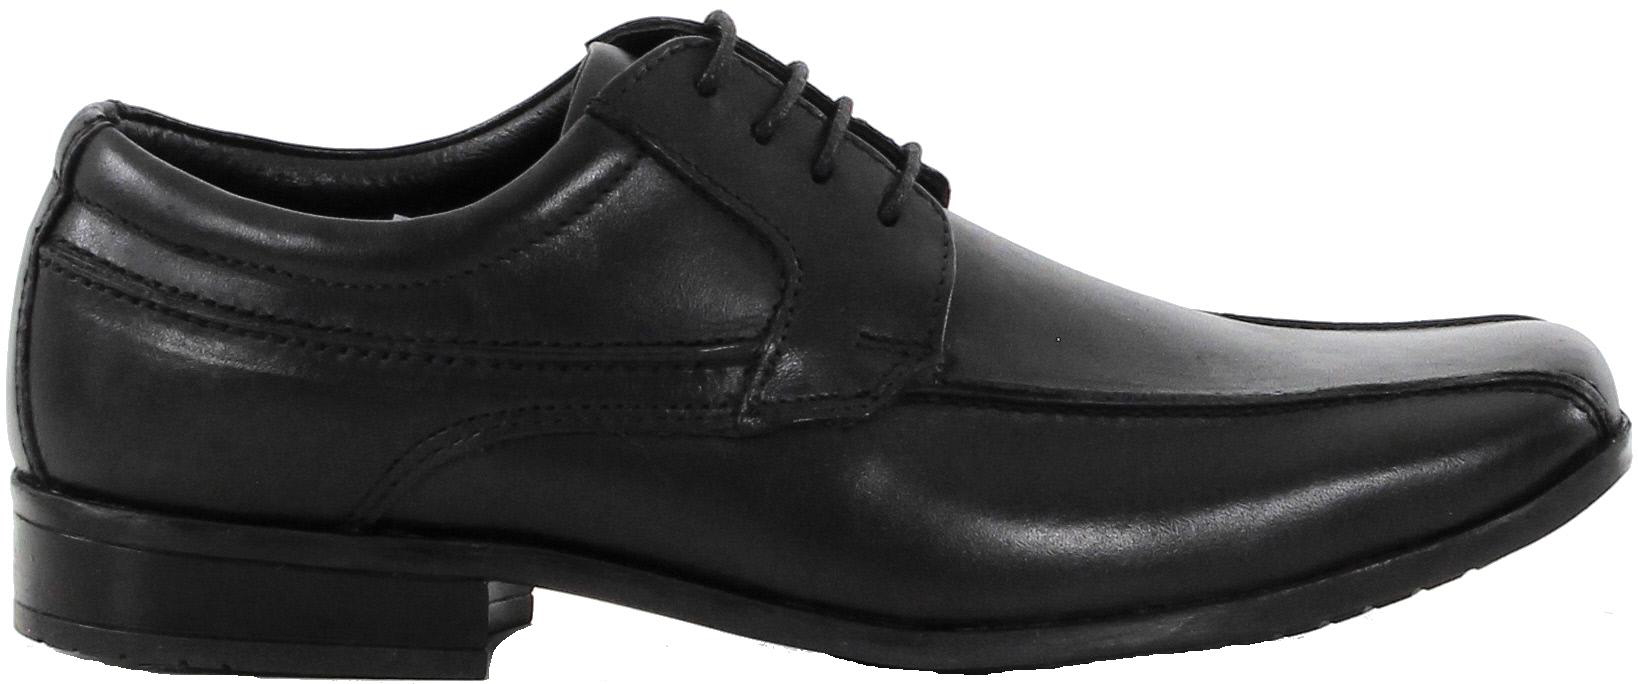 Senator Walking shoes 458-1743 black - Stilettoshop.eu webstore